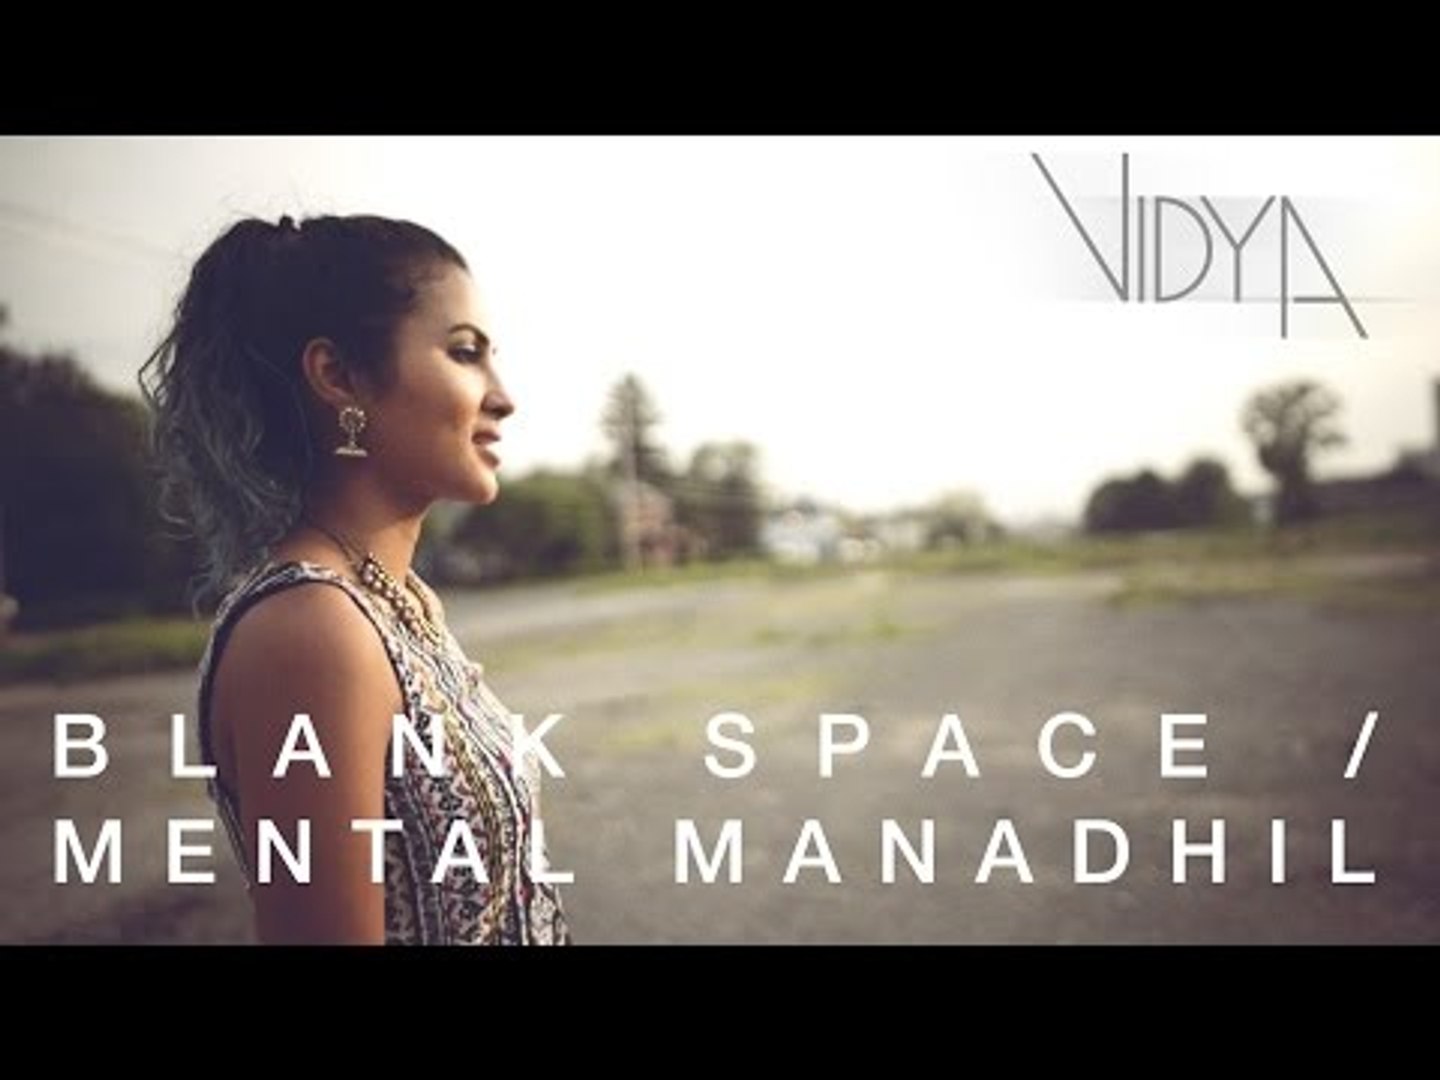 Vidya Vox Xxx Video - Taylor Swift - Blank Space - Mental Manadhil (Vidya Vox Mashup Cover) #  Zili music company ! - video Dailymotion